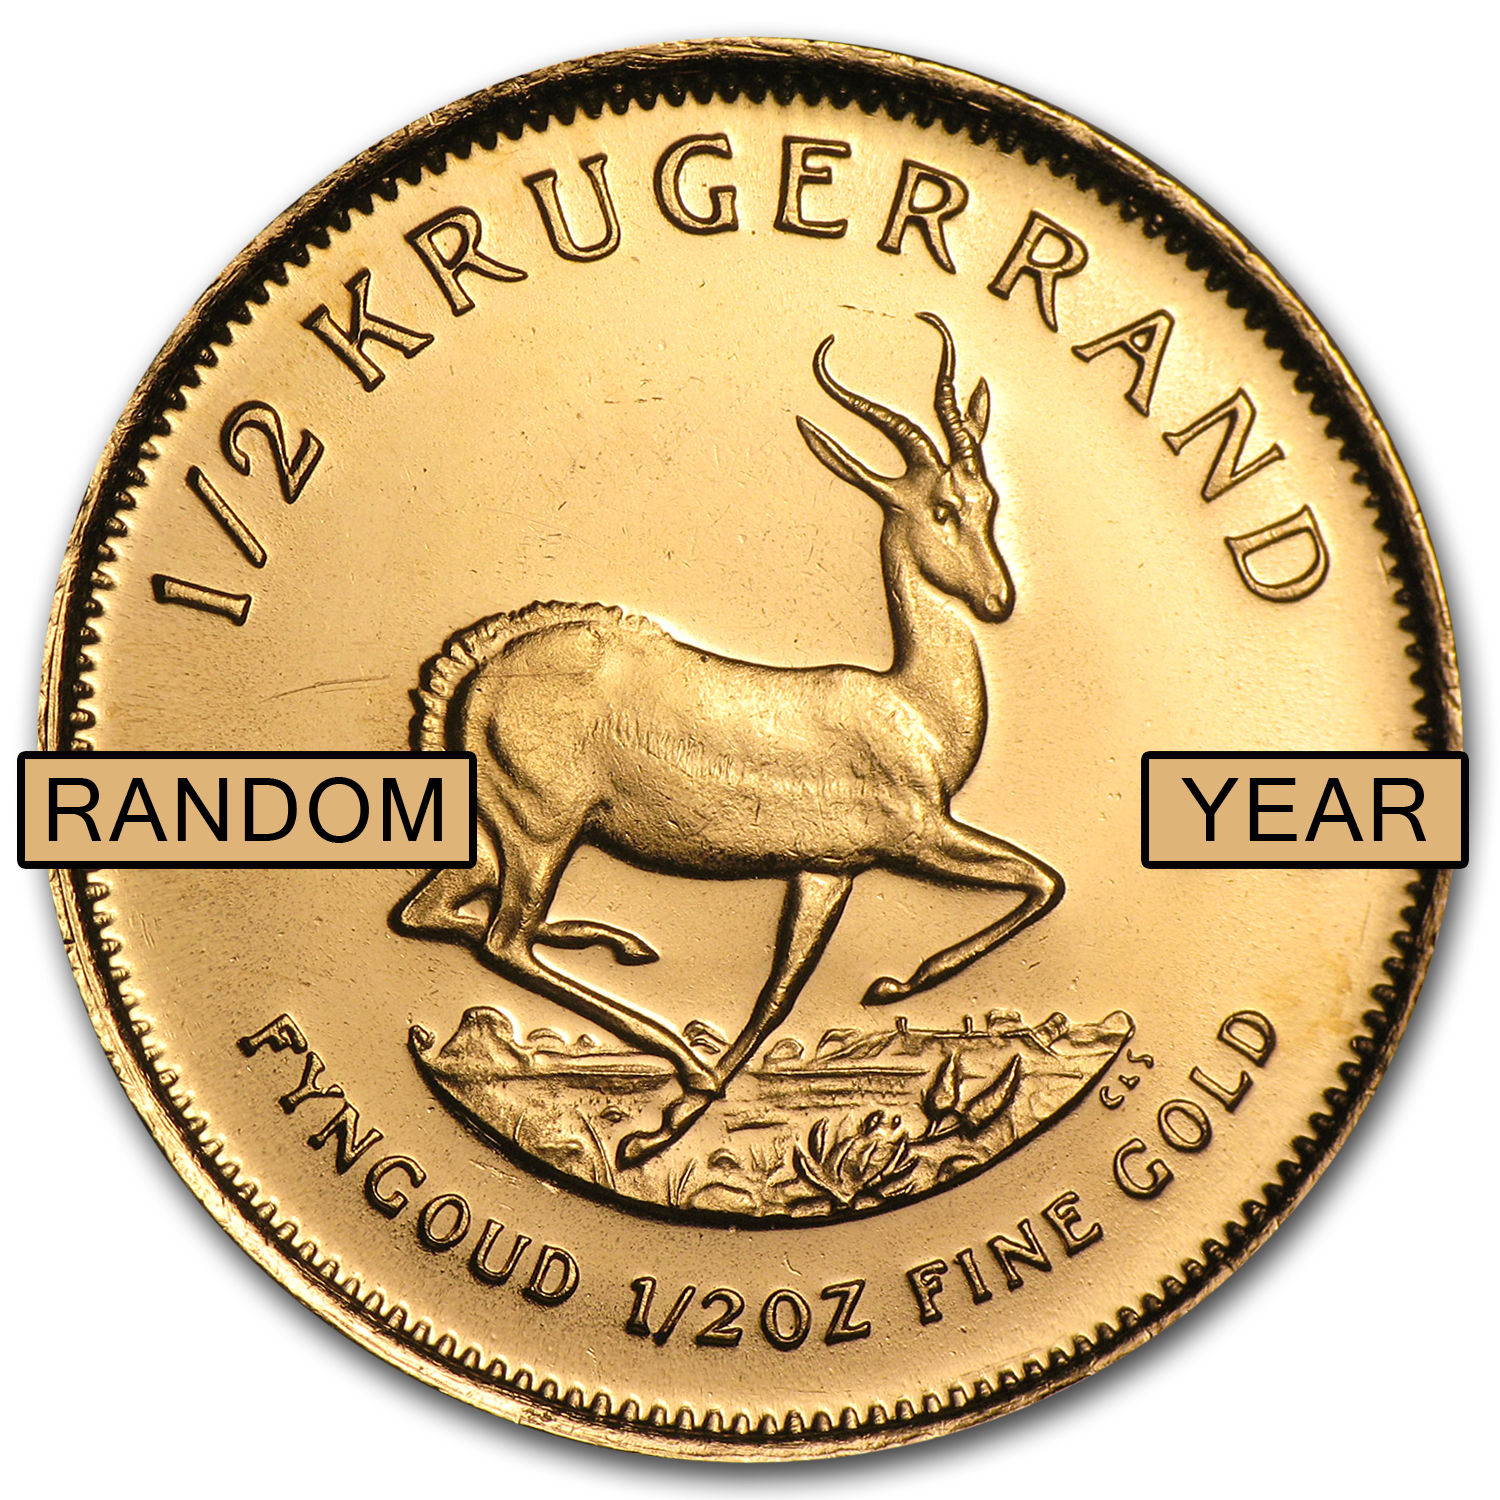 South Africa 1/2 oz Gold Krugerrand (Random Year) - SKU #1016